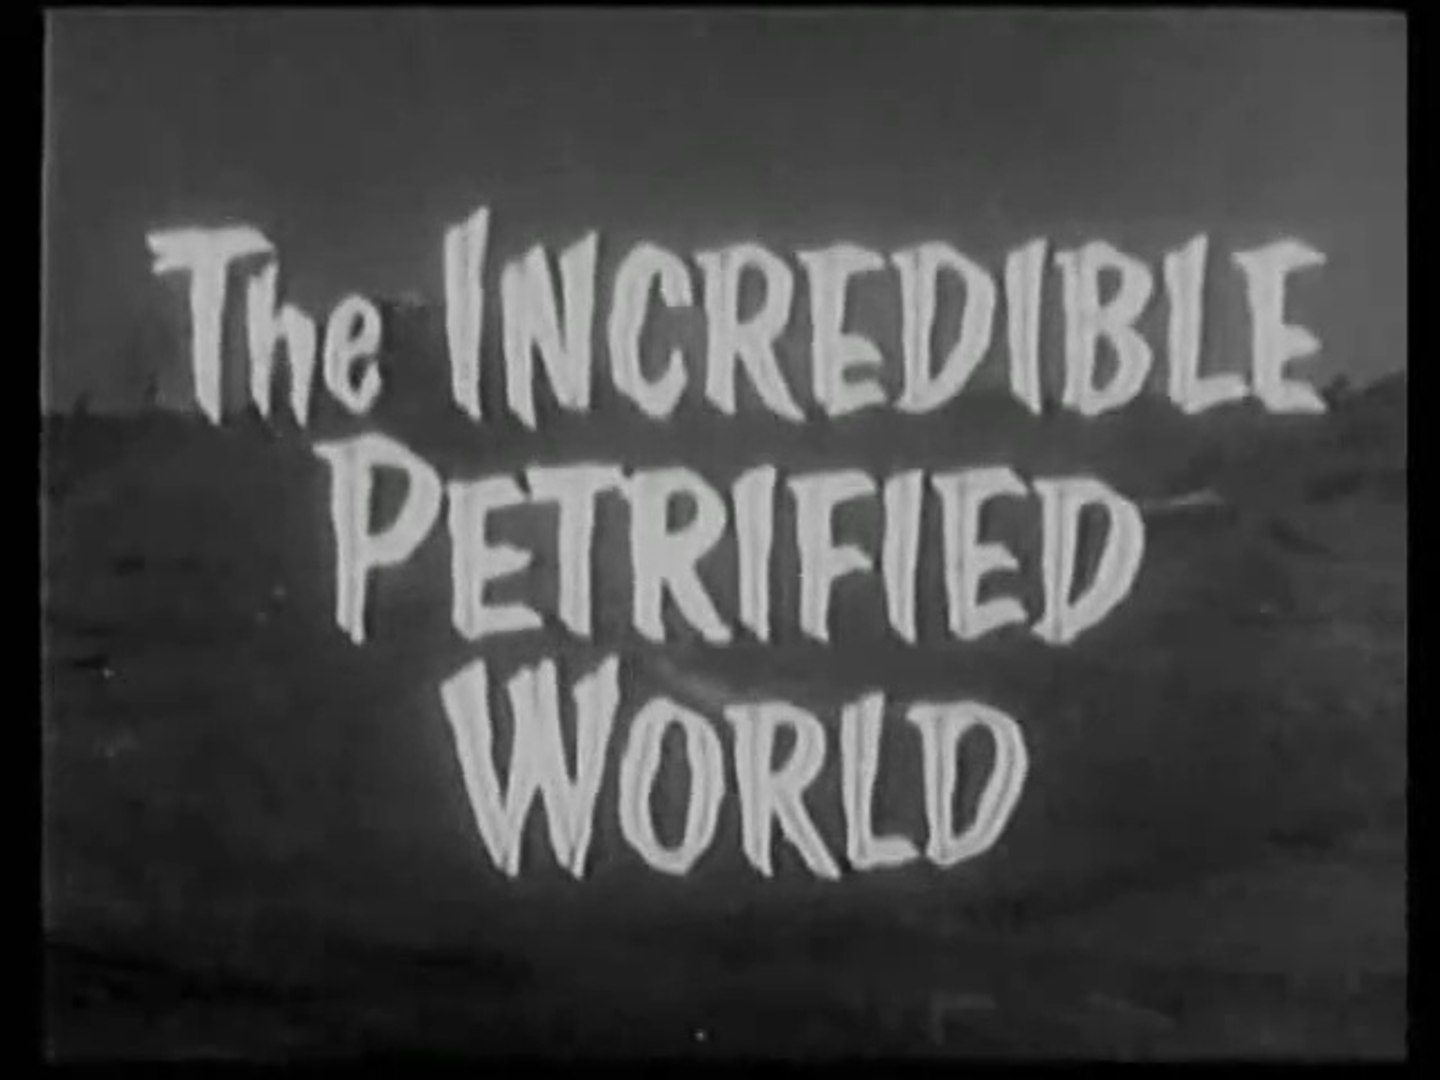 The Incredible Petrified World (1960) Retro Sci-fi movie